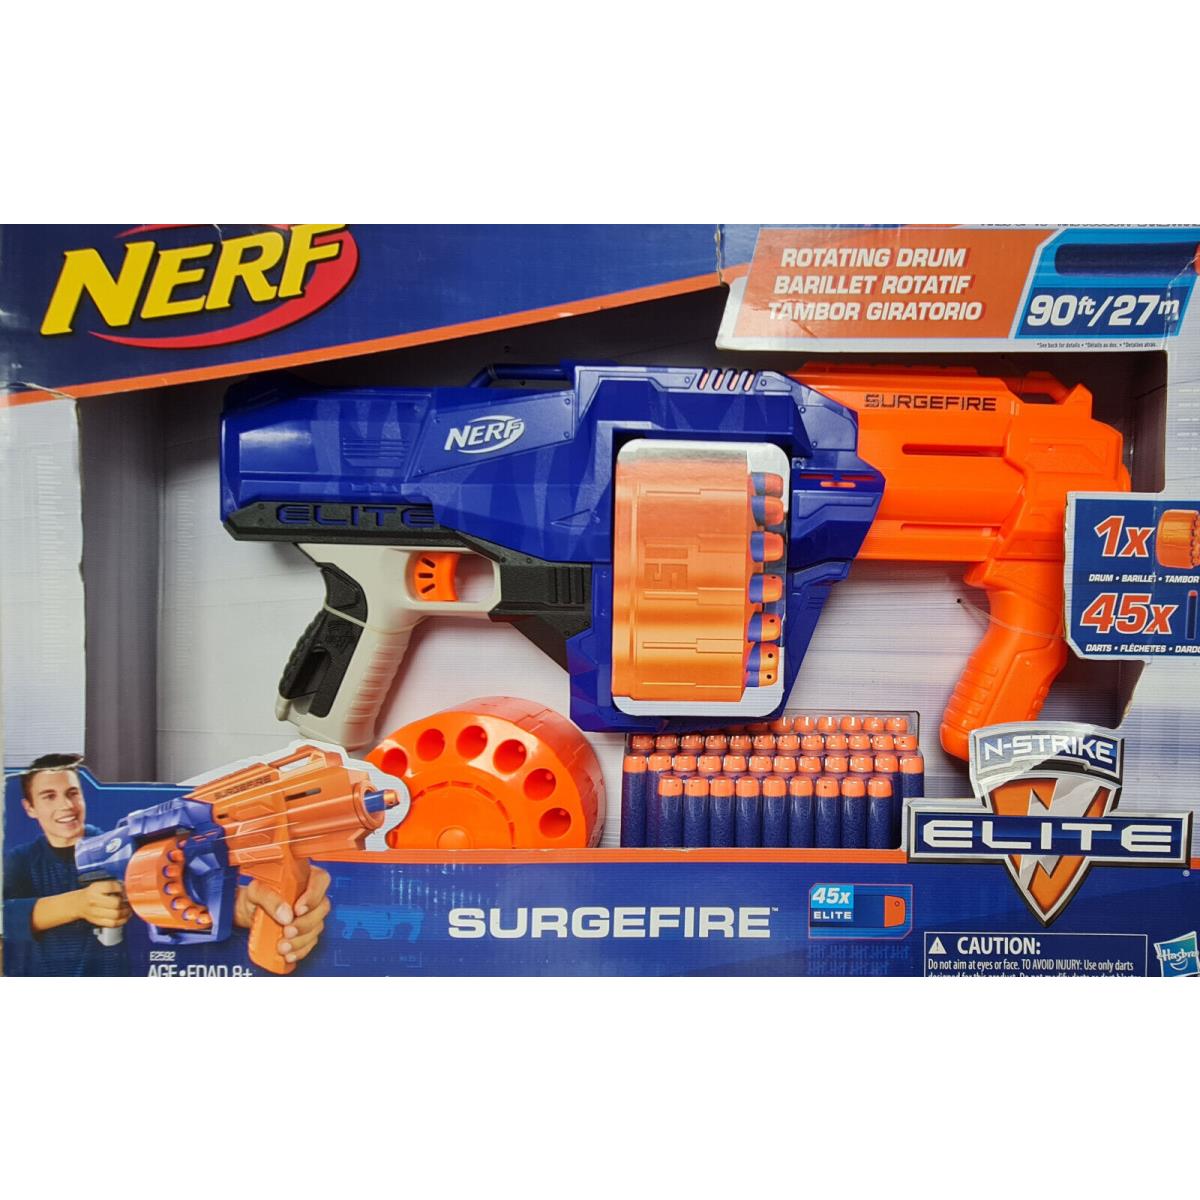 Nerf N-strike Elite Surgefire E2592 with Rotating Drum and 45 Darts